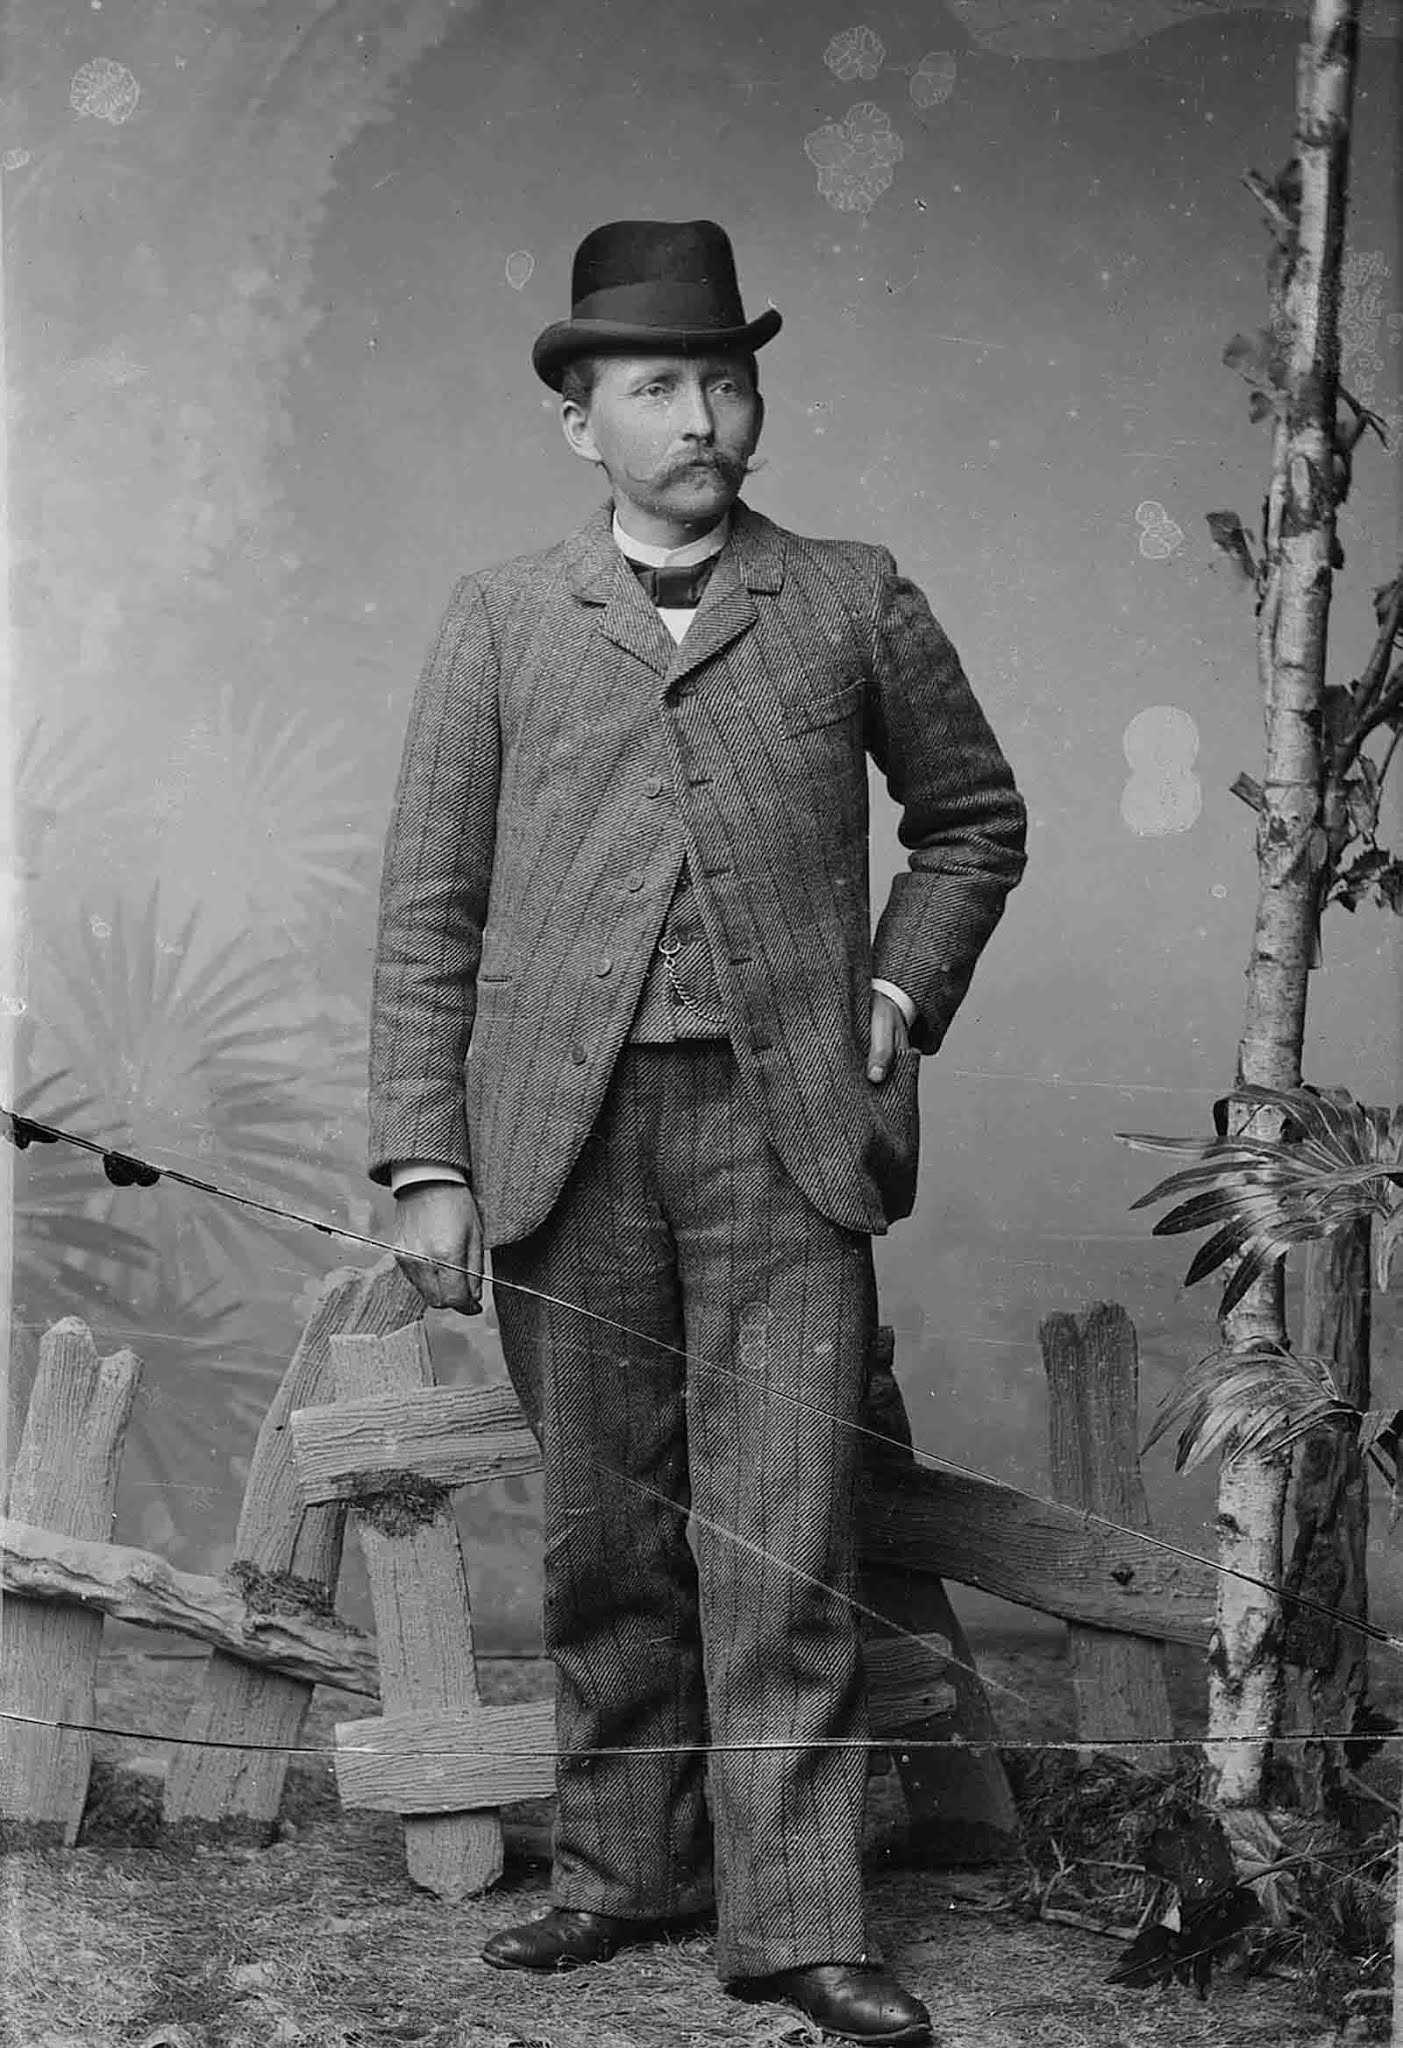 Nils Olsson Reppen (1856-1925)